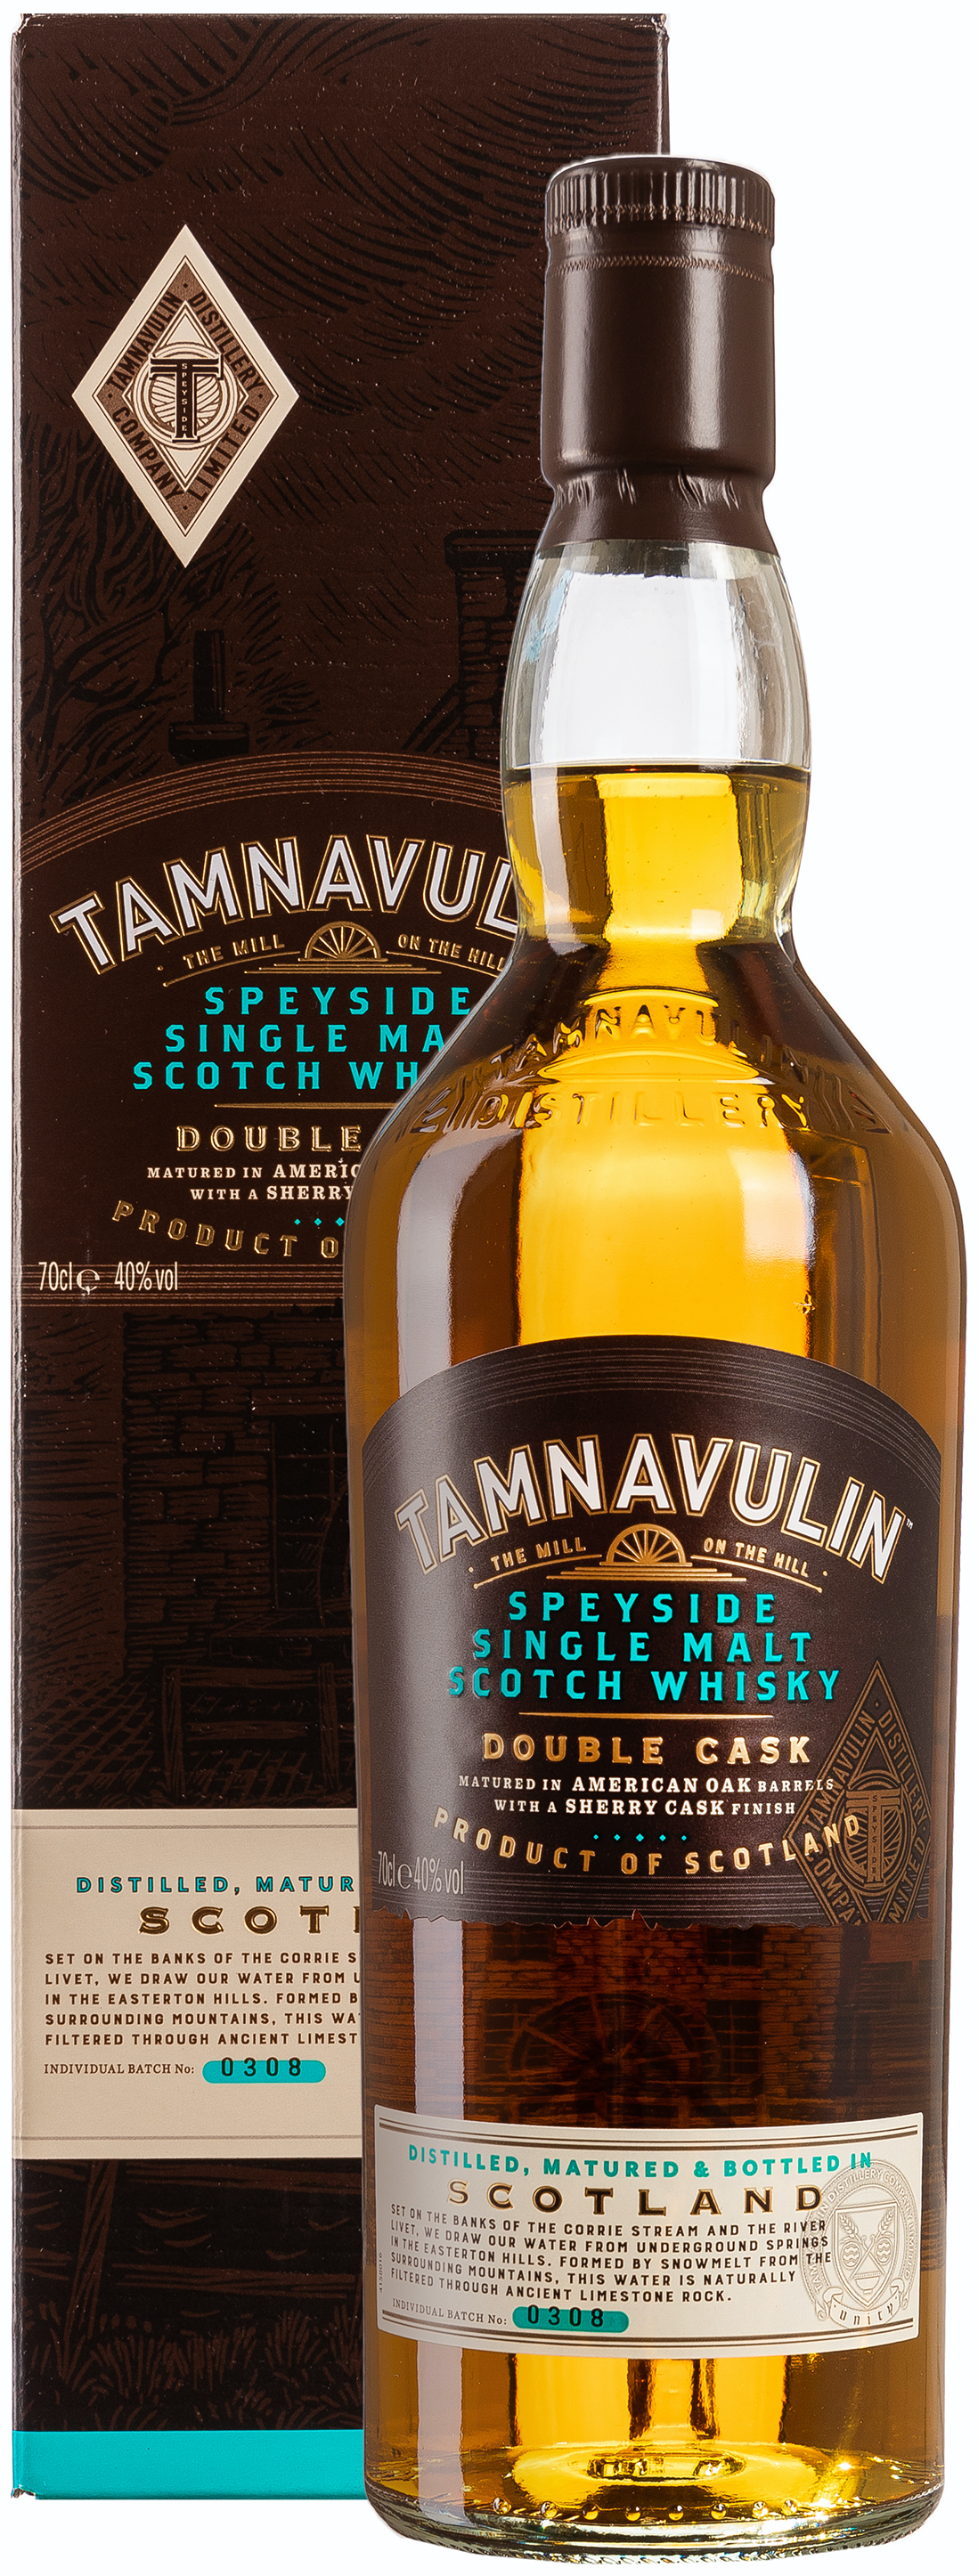 Tamnavulin Seayside Single Malt Scotch Whiskey 40% vol. 0,7L